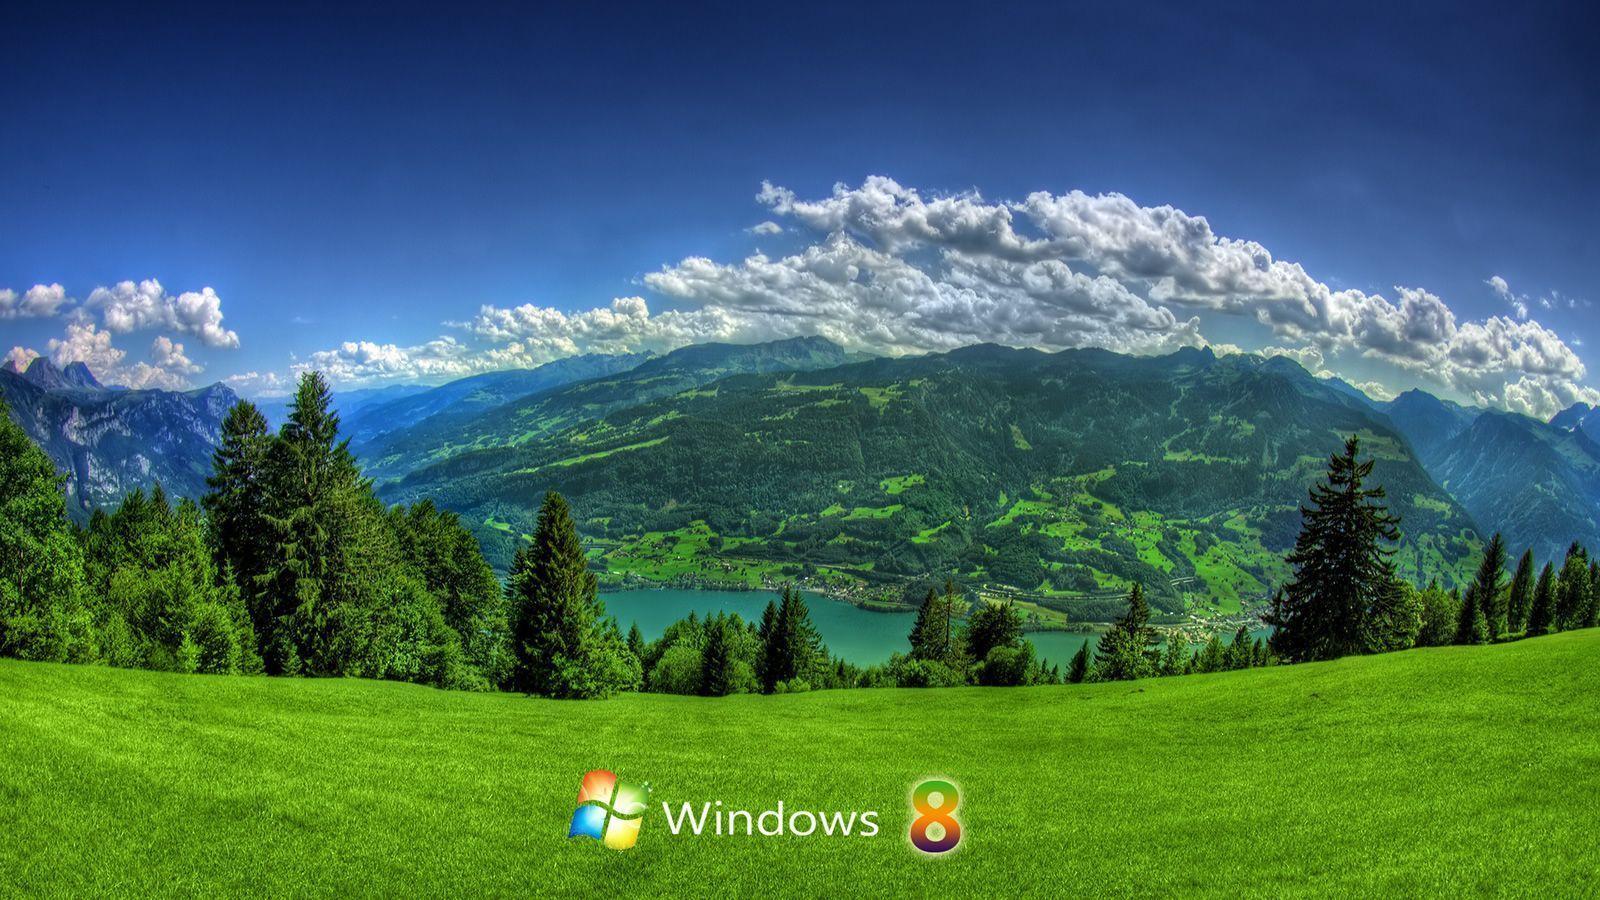 image For > Wallpaper Windows 8 3D